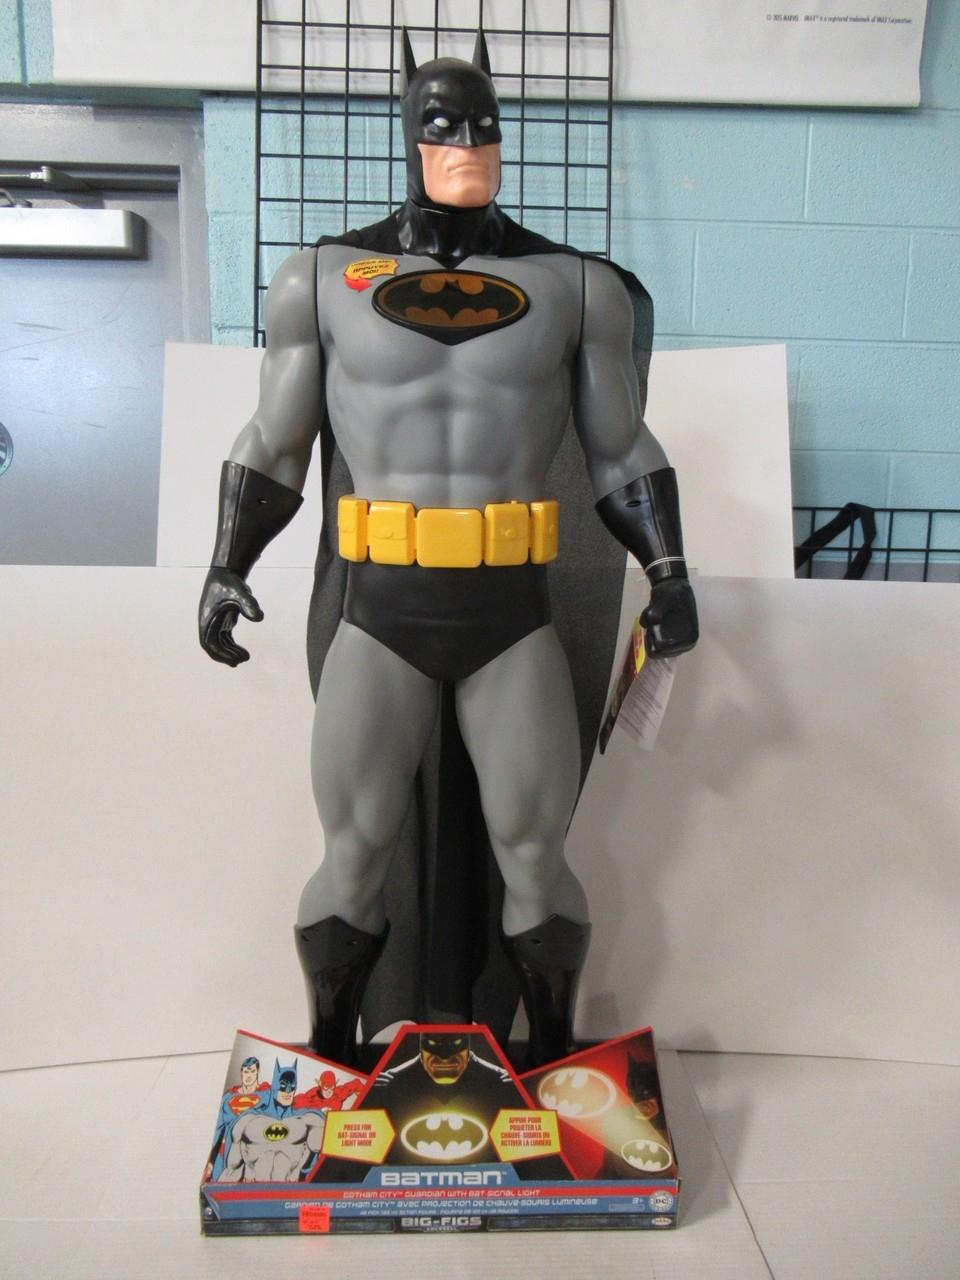 Batman 48" Figure w/ Bat-Signal Light